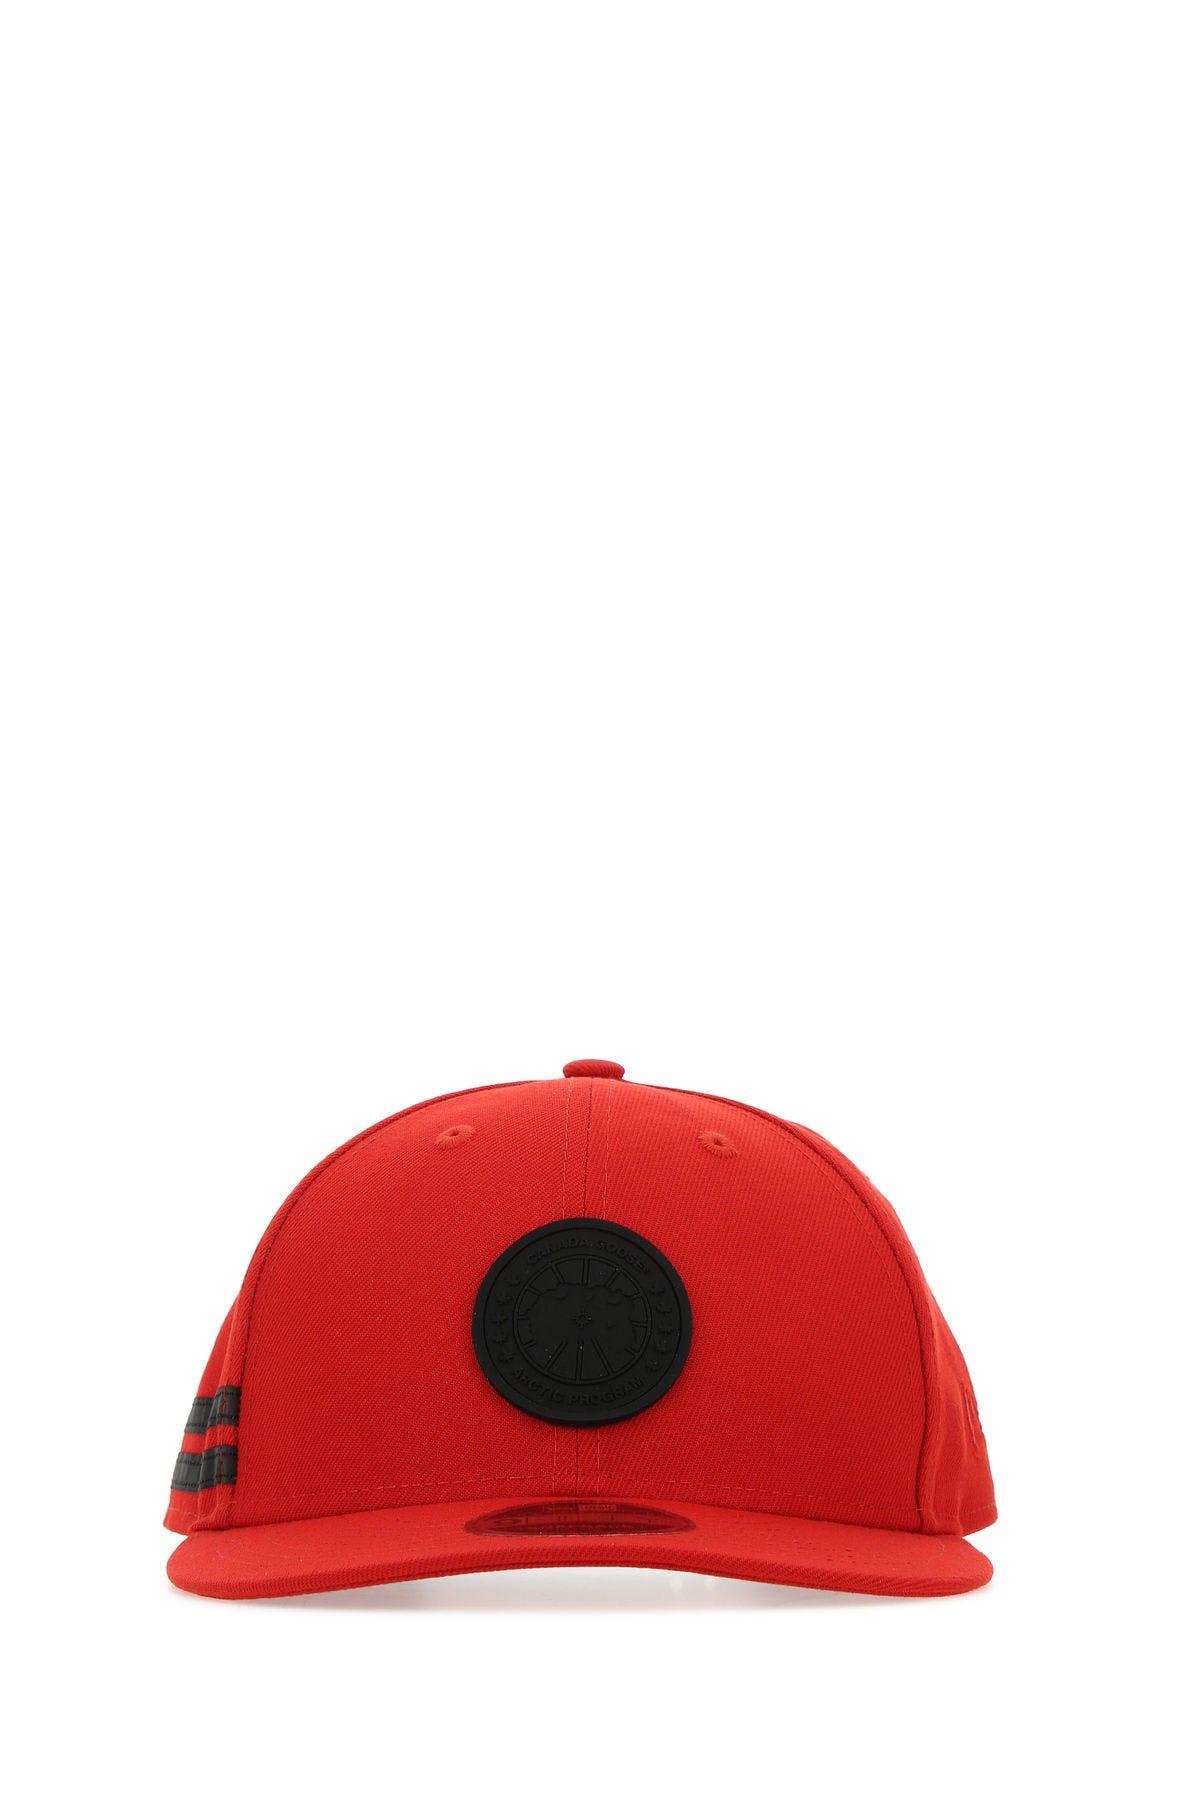 Shop Canada Goose Red Polyester Arctic Baseball Cap